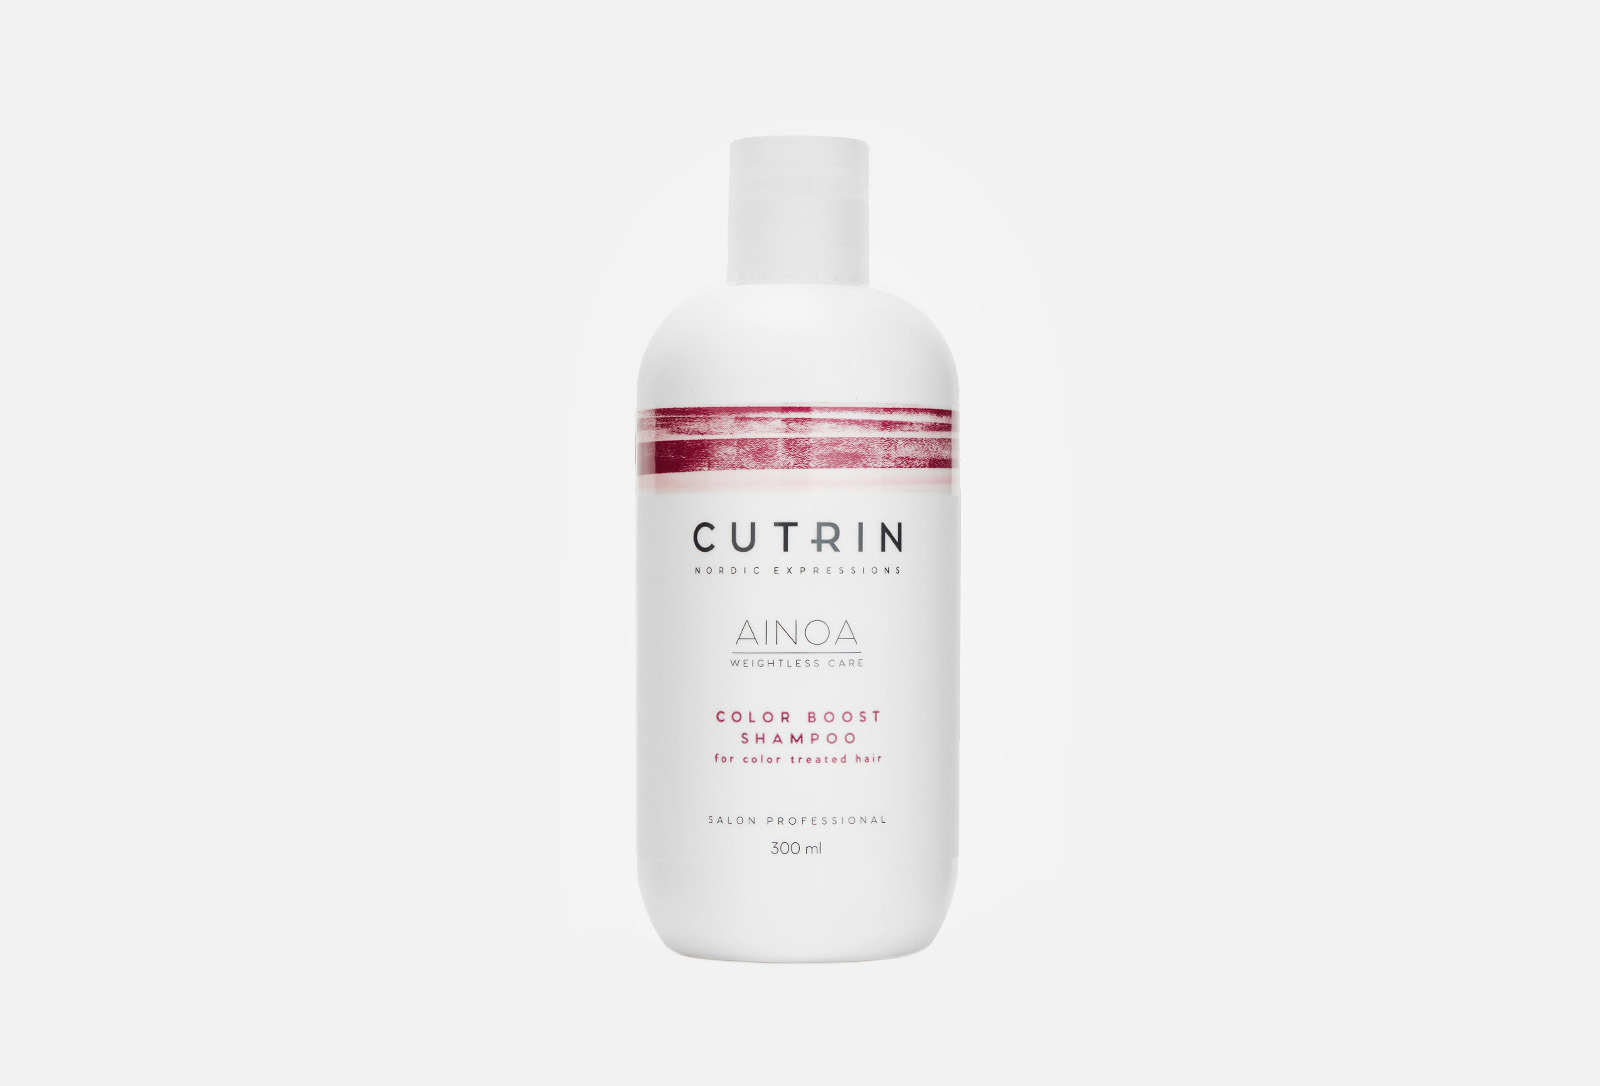 Repair Cutrin 1000мл шампунь. Шампунь "Cutrin" для сохранения цвета. Cutrin ainoa Color Boost Shampoo 300ml. Кутрин шампунь для сохранения цвета.